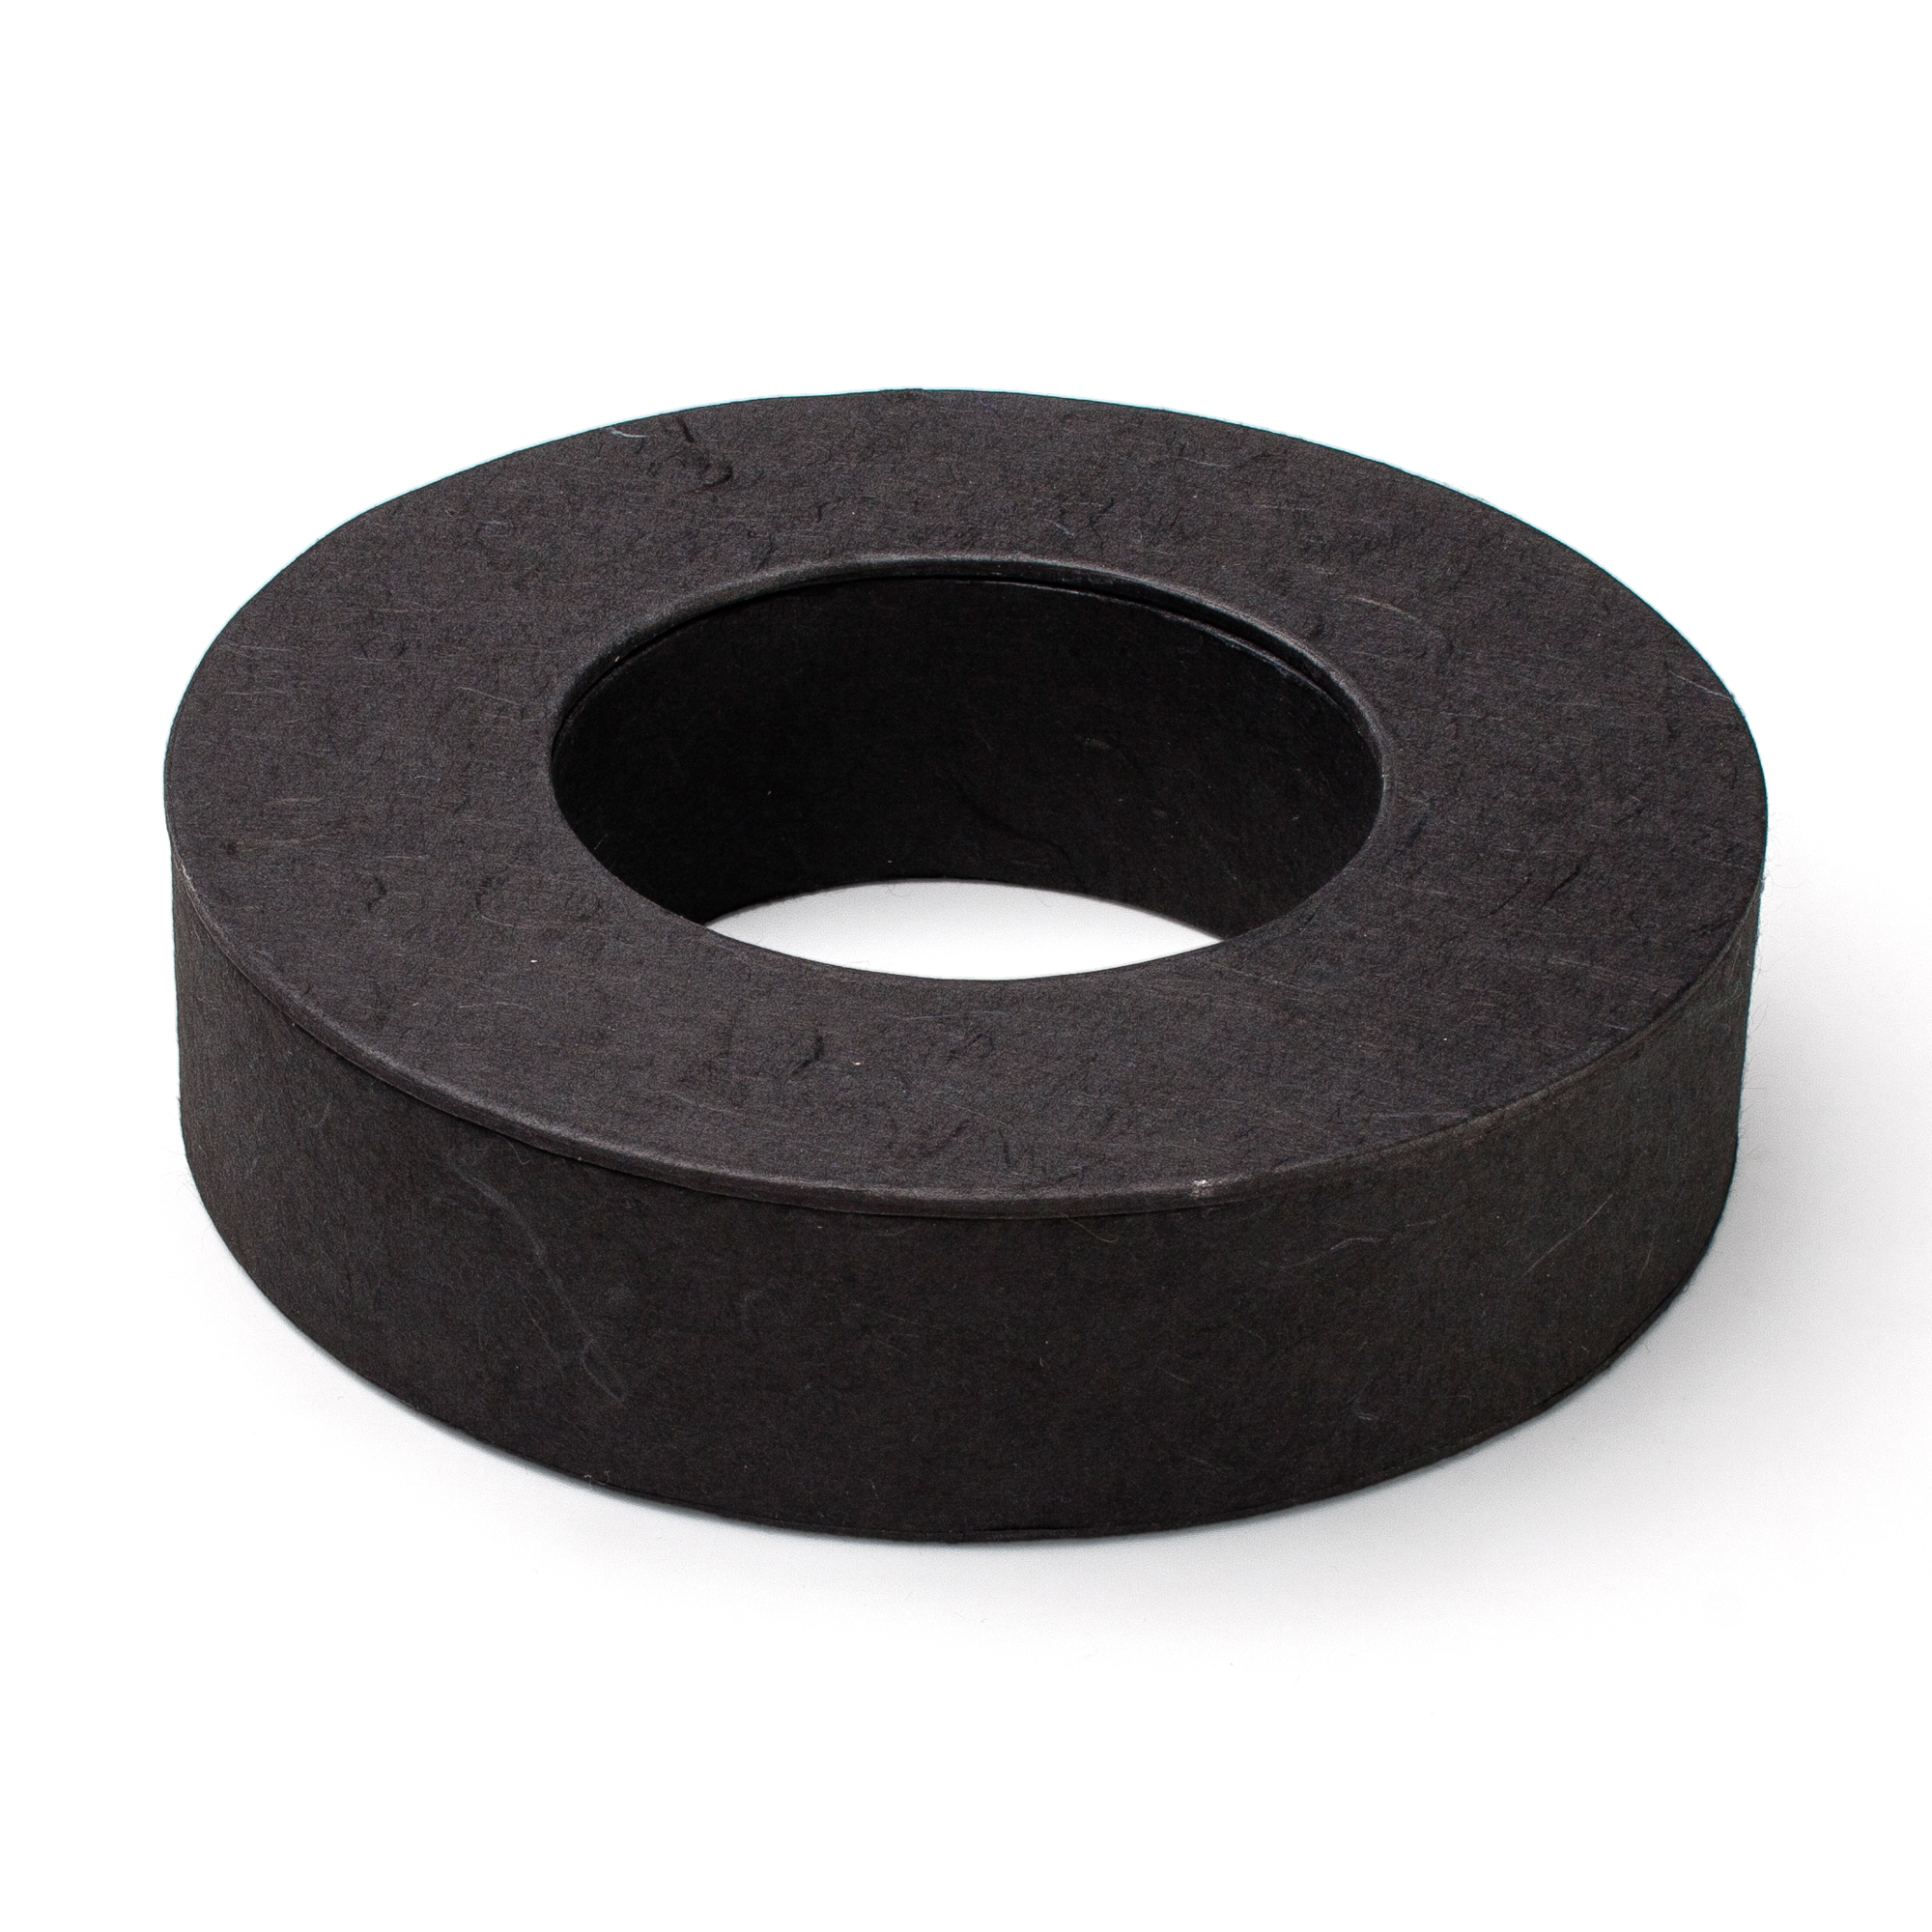 Puk Loop, 190 x H 45 mm, black